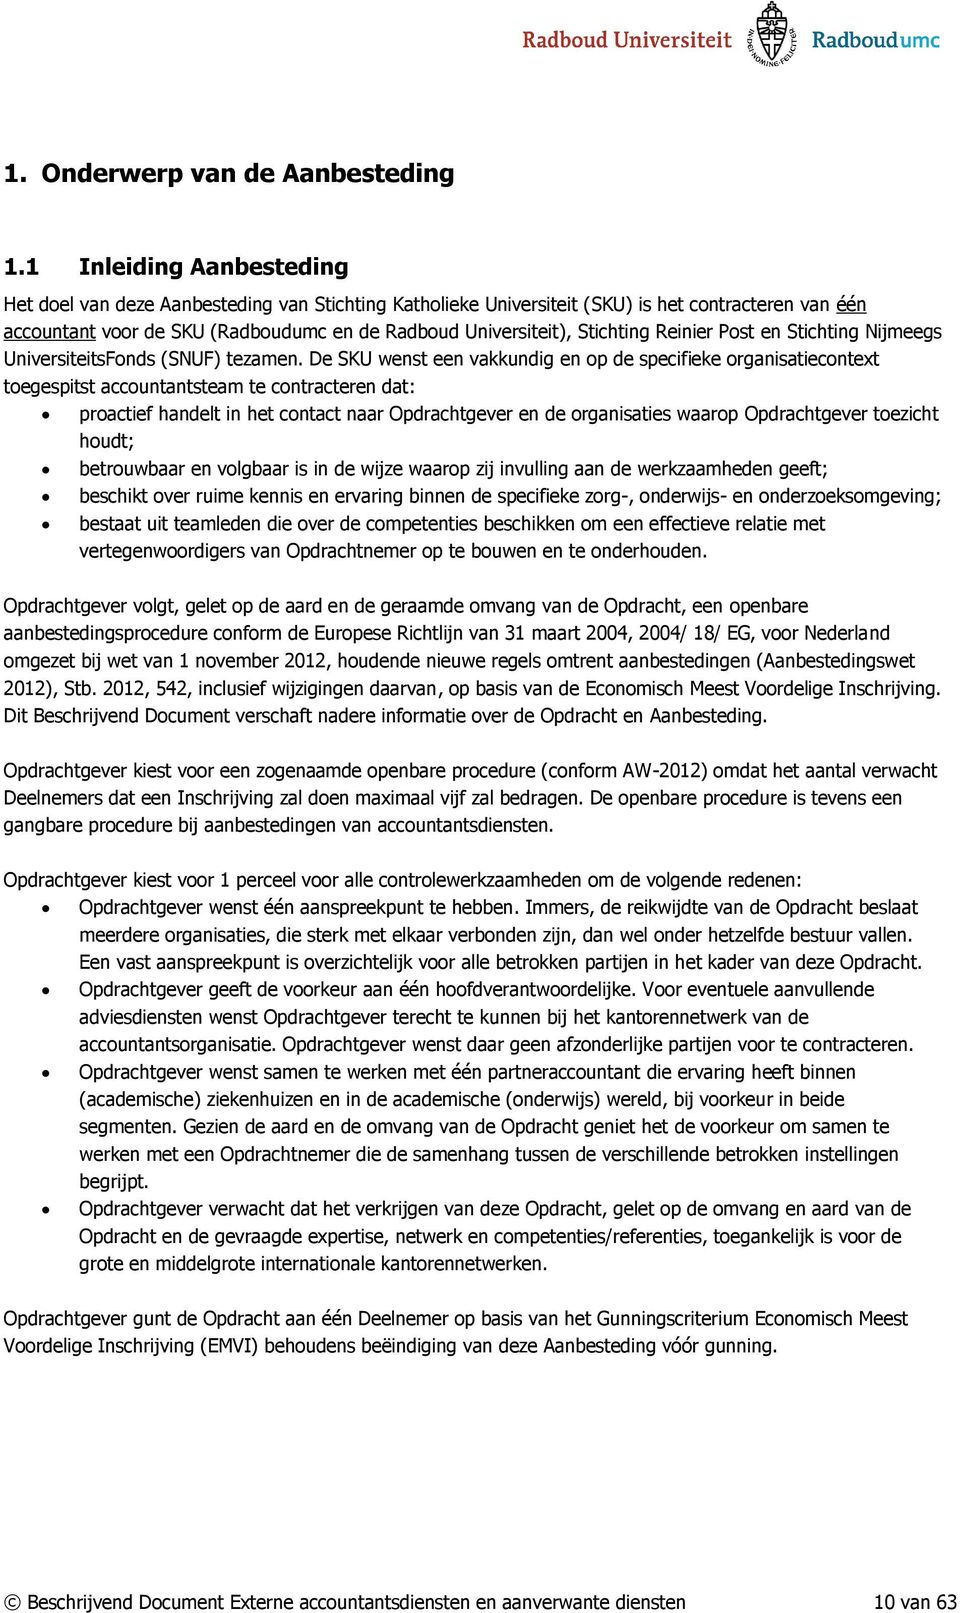 Stichting Reinier Post en Stichting Nijmeegs UniversiteitsFonds (SNUF) tezamen.